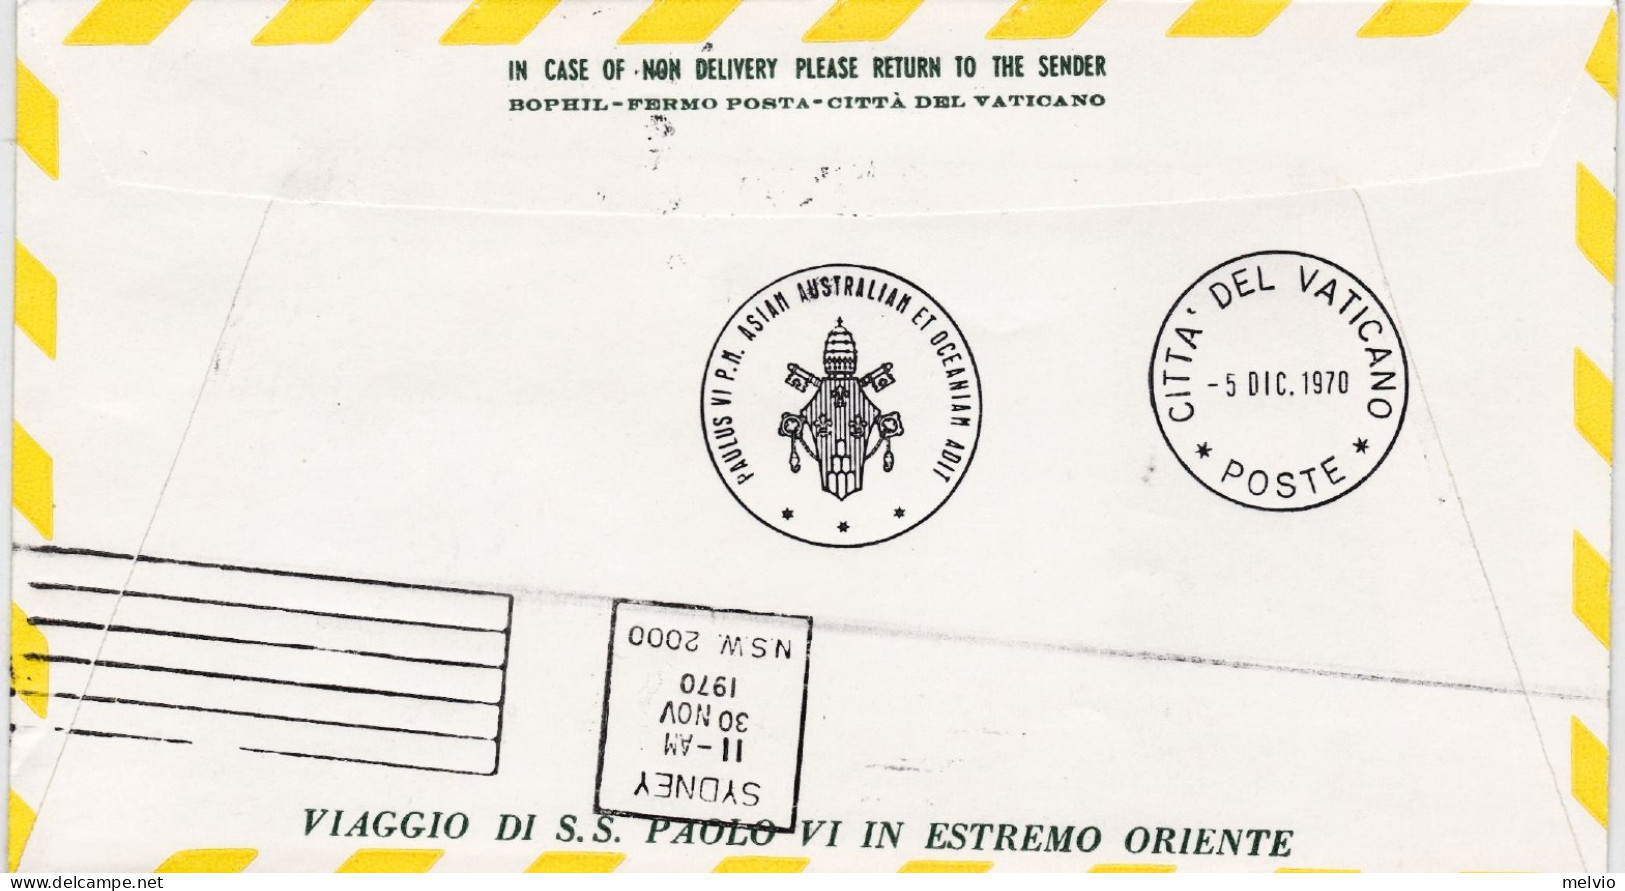 Vaticano-1970 Dispaccio Speciale Sydney Australia Viaggio Papale Sua Santita' Pa - Luchtpostbladen